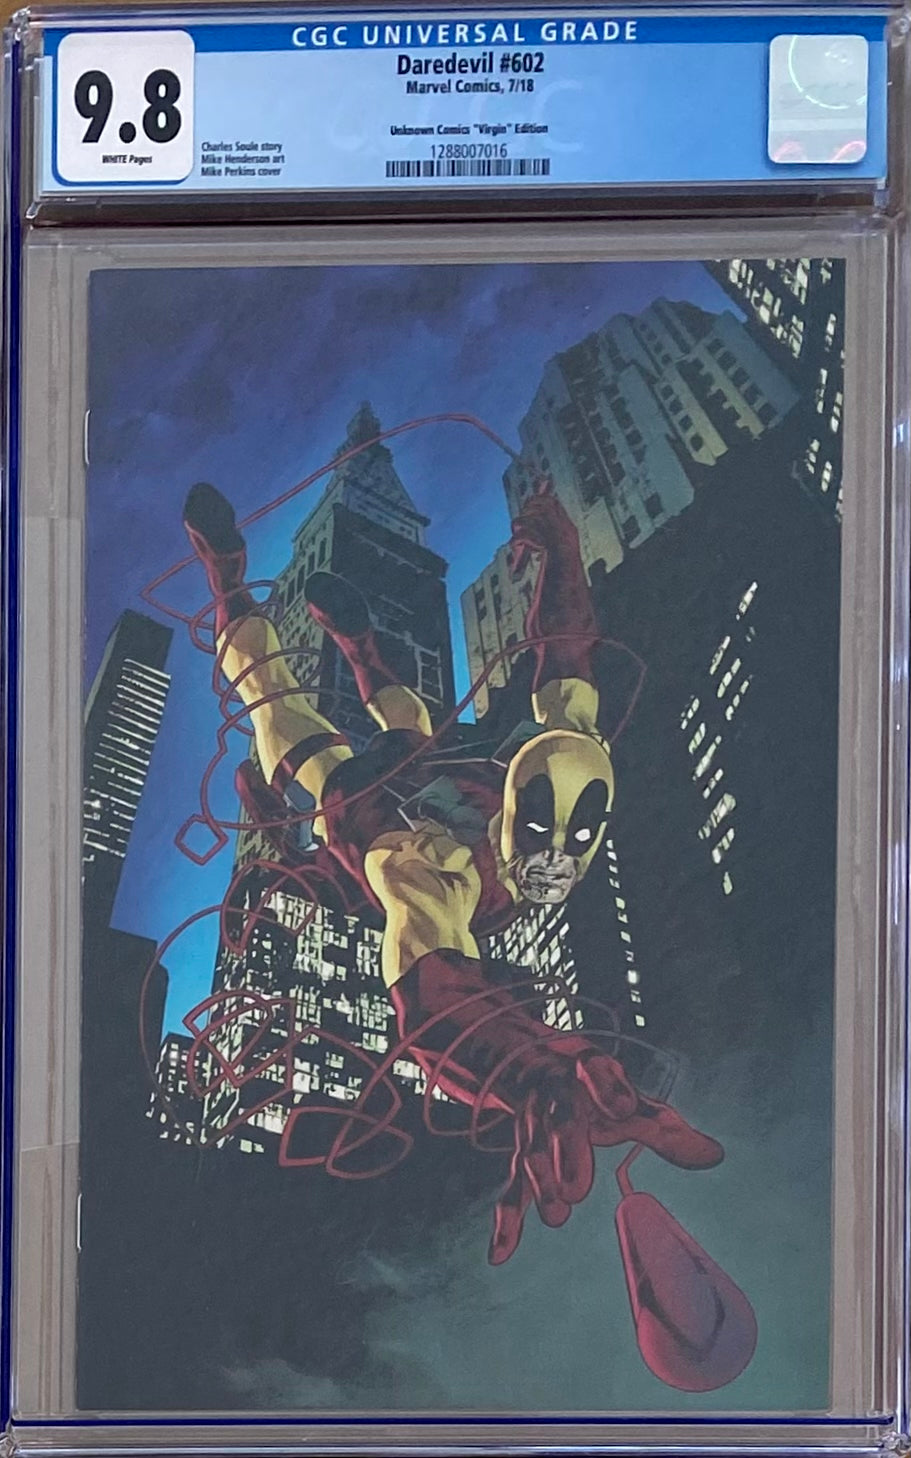 Daredevil #602 Perkins Unknown Comics Virgin Edition Variant CGC 9.8